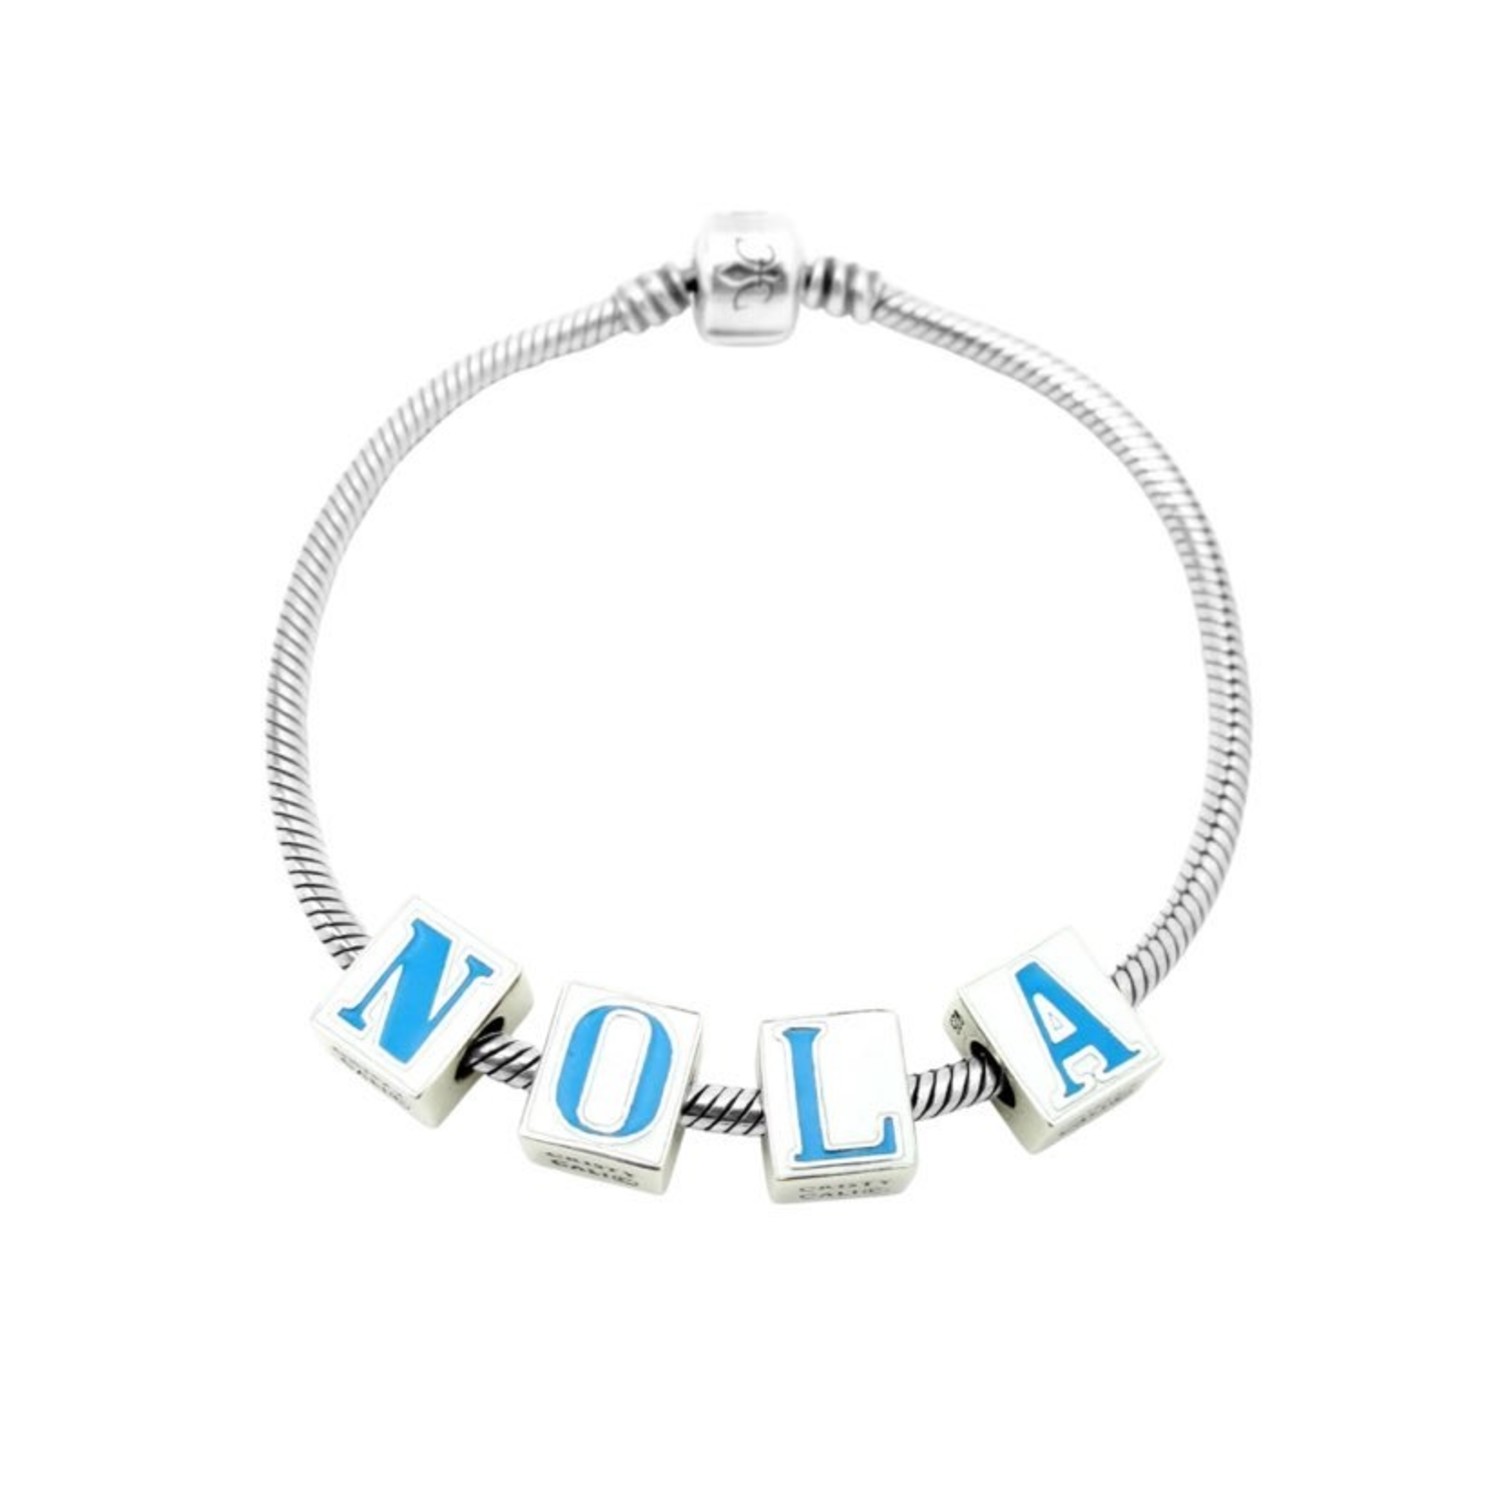 NOLA Couture Charm Bracelet - Fleurty Girl